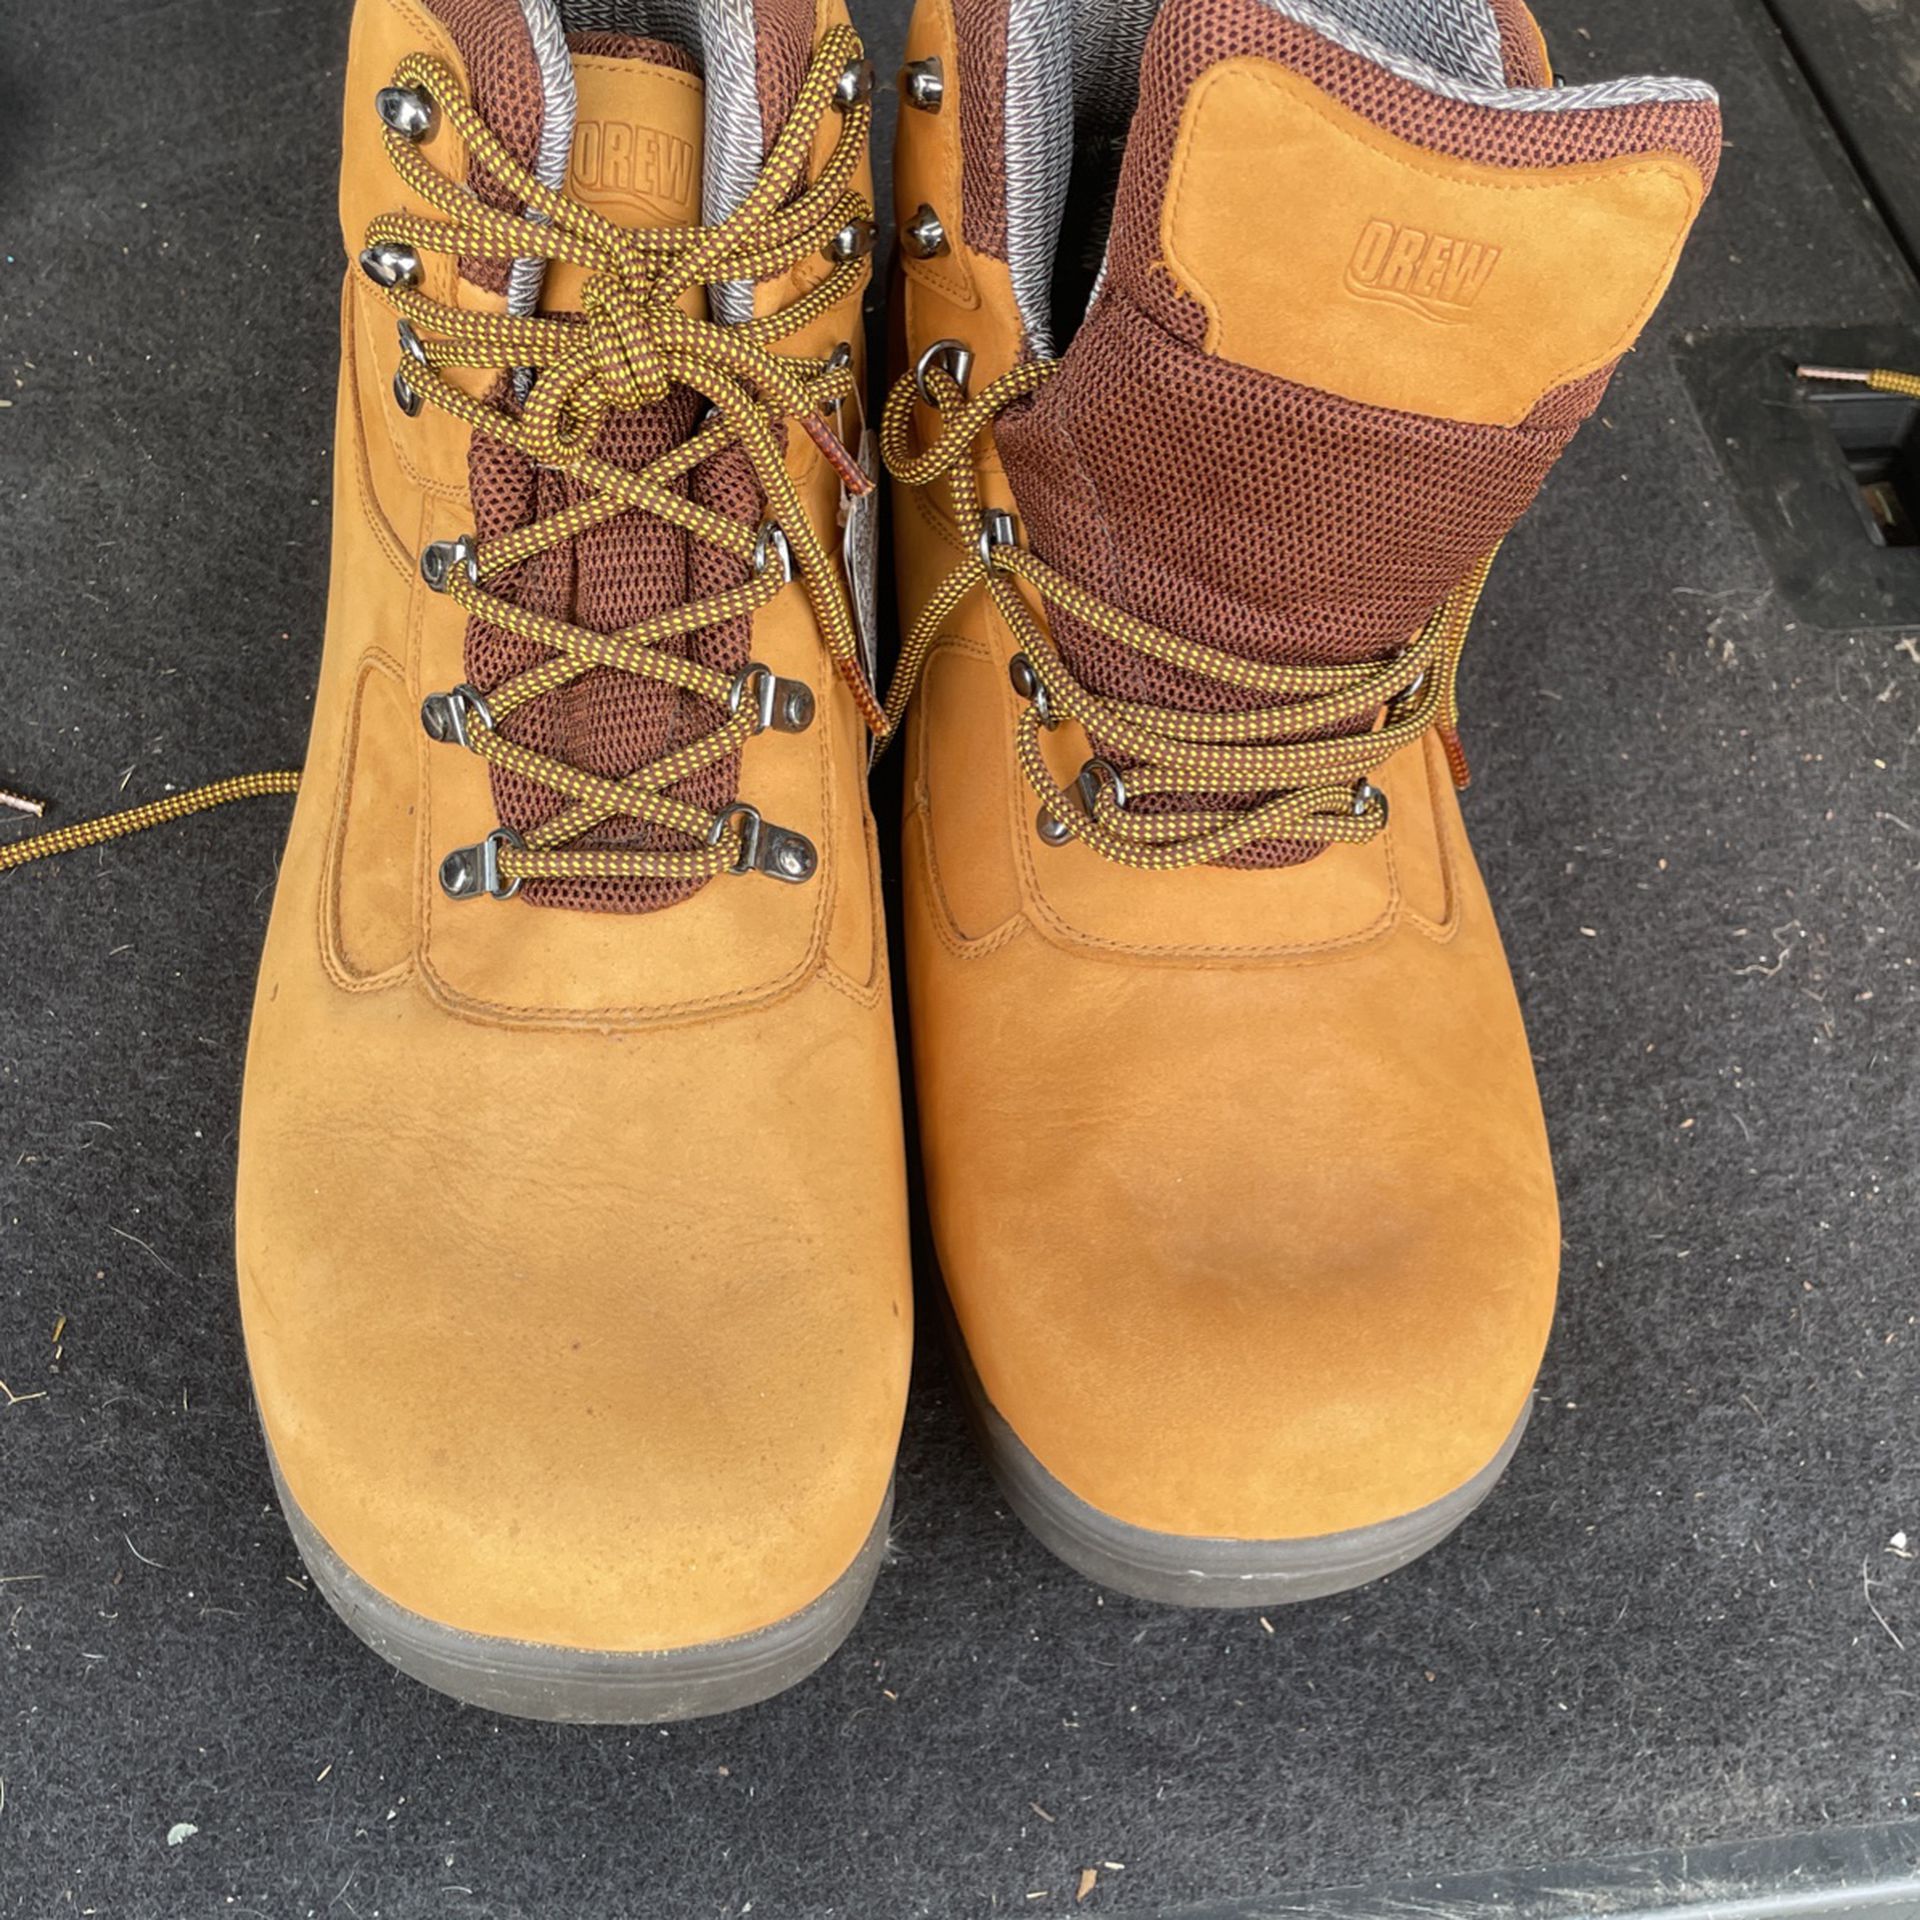 Drew Work Boots. Size 14 EW